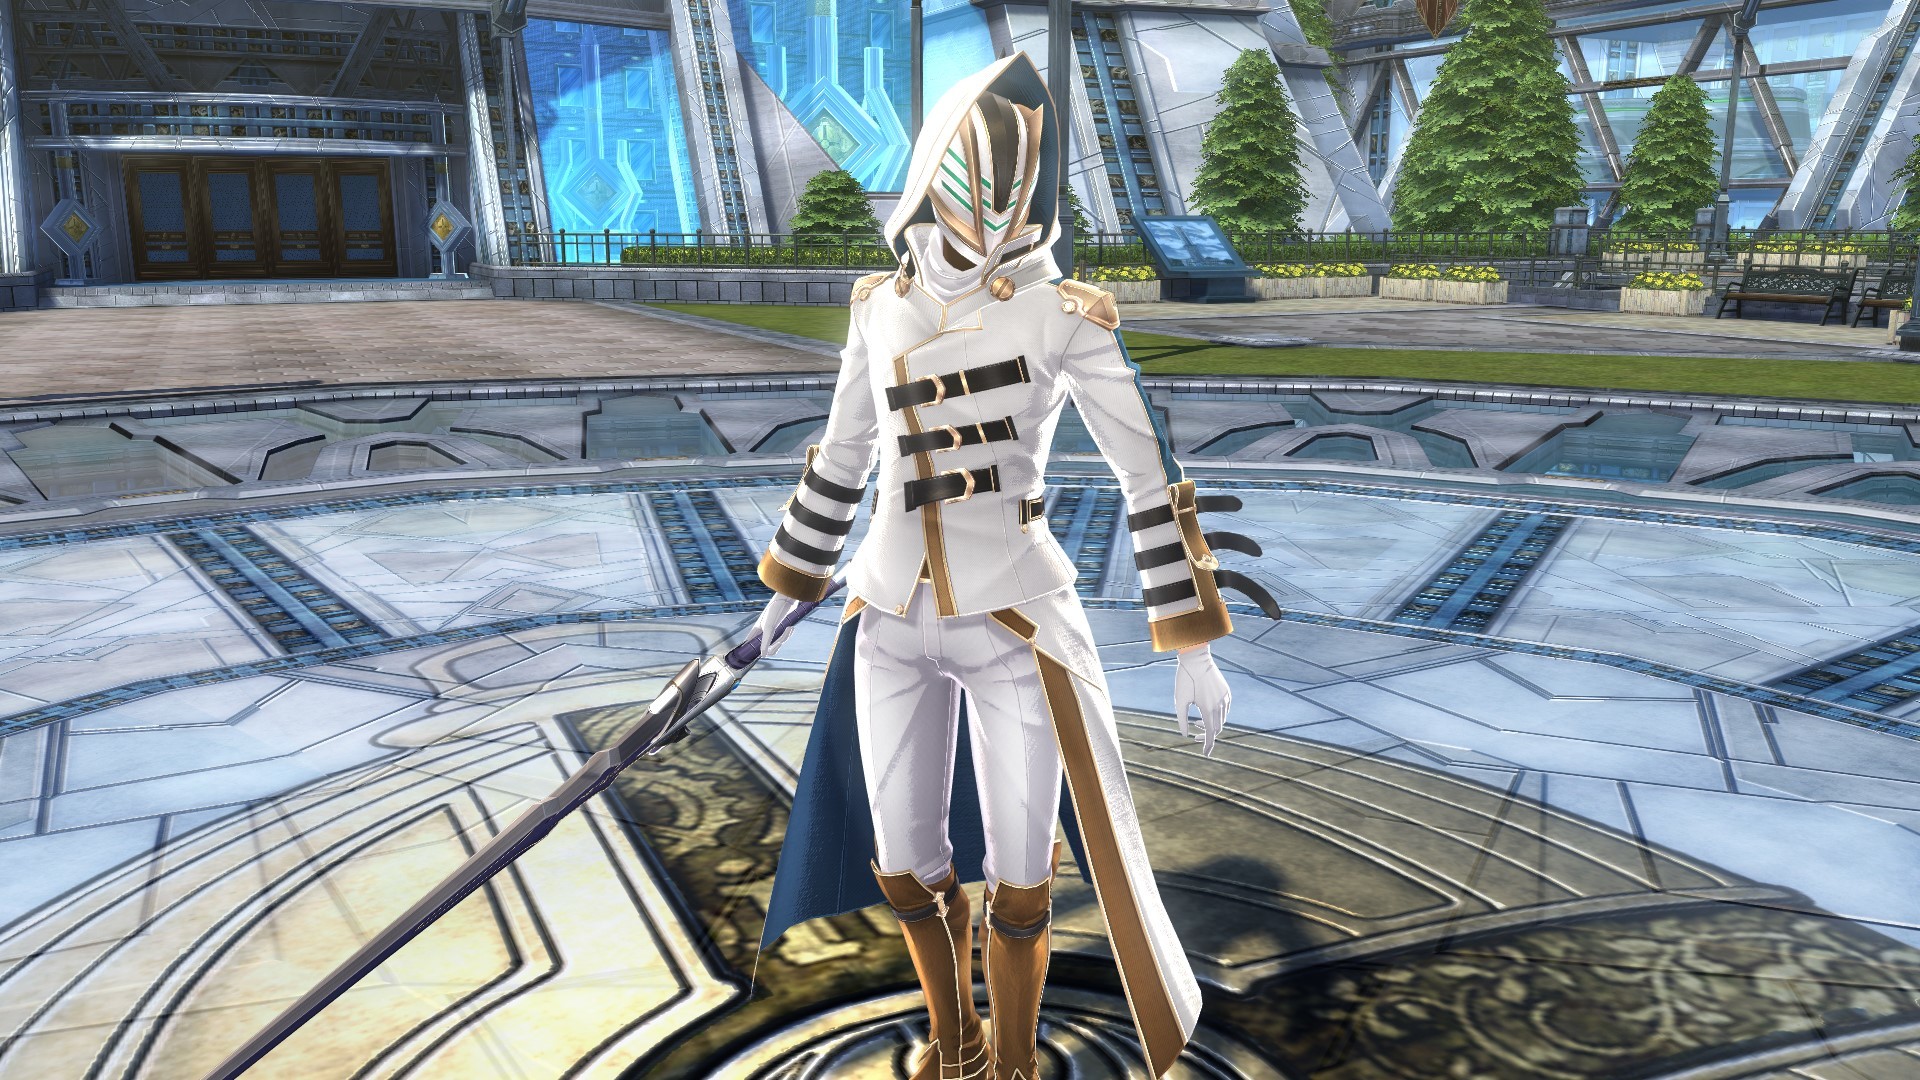 THE LEGEND OF HEROES: HAJIMARI NO KISEKI - C's Special Costume "White Knight"